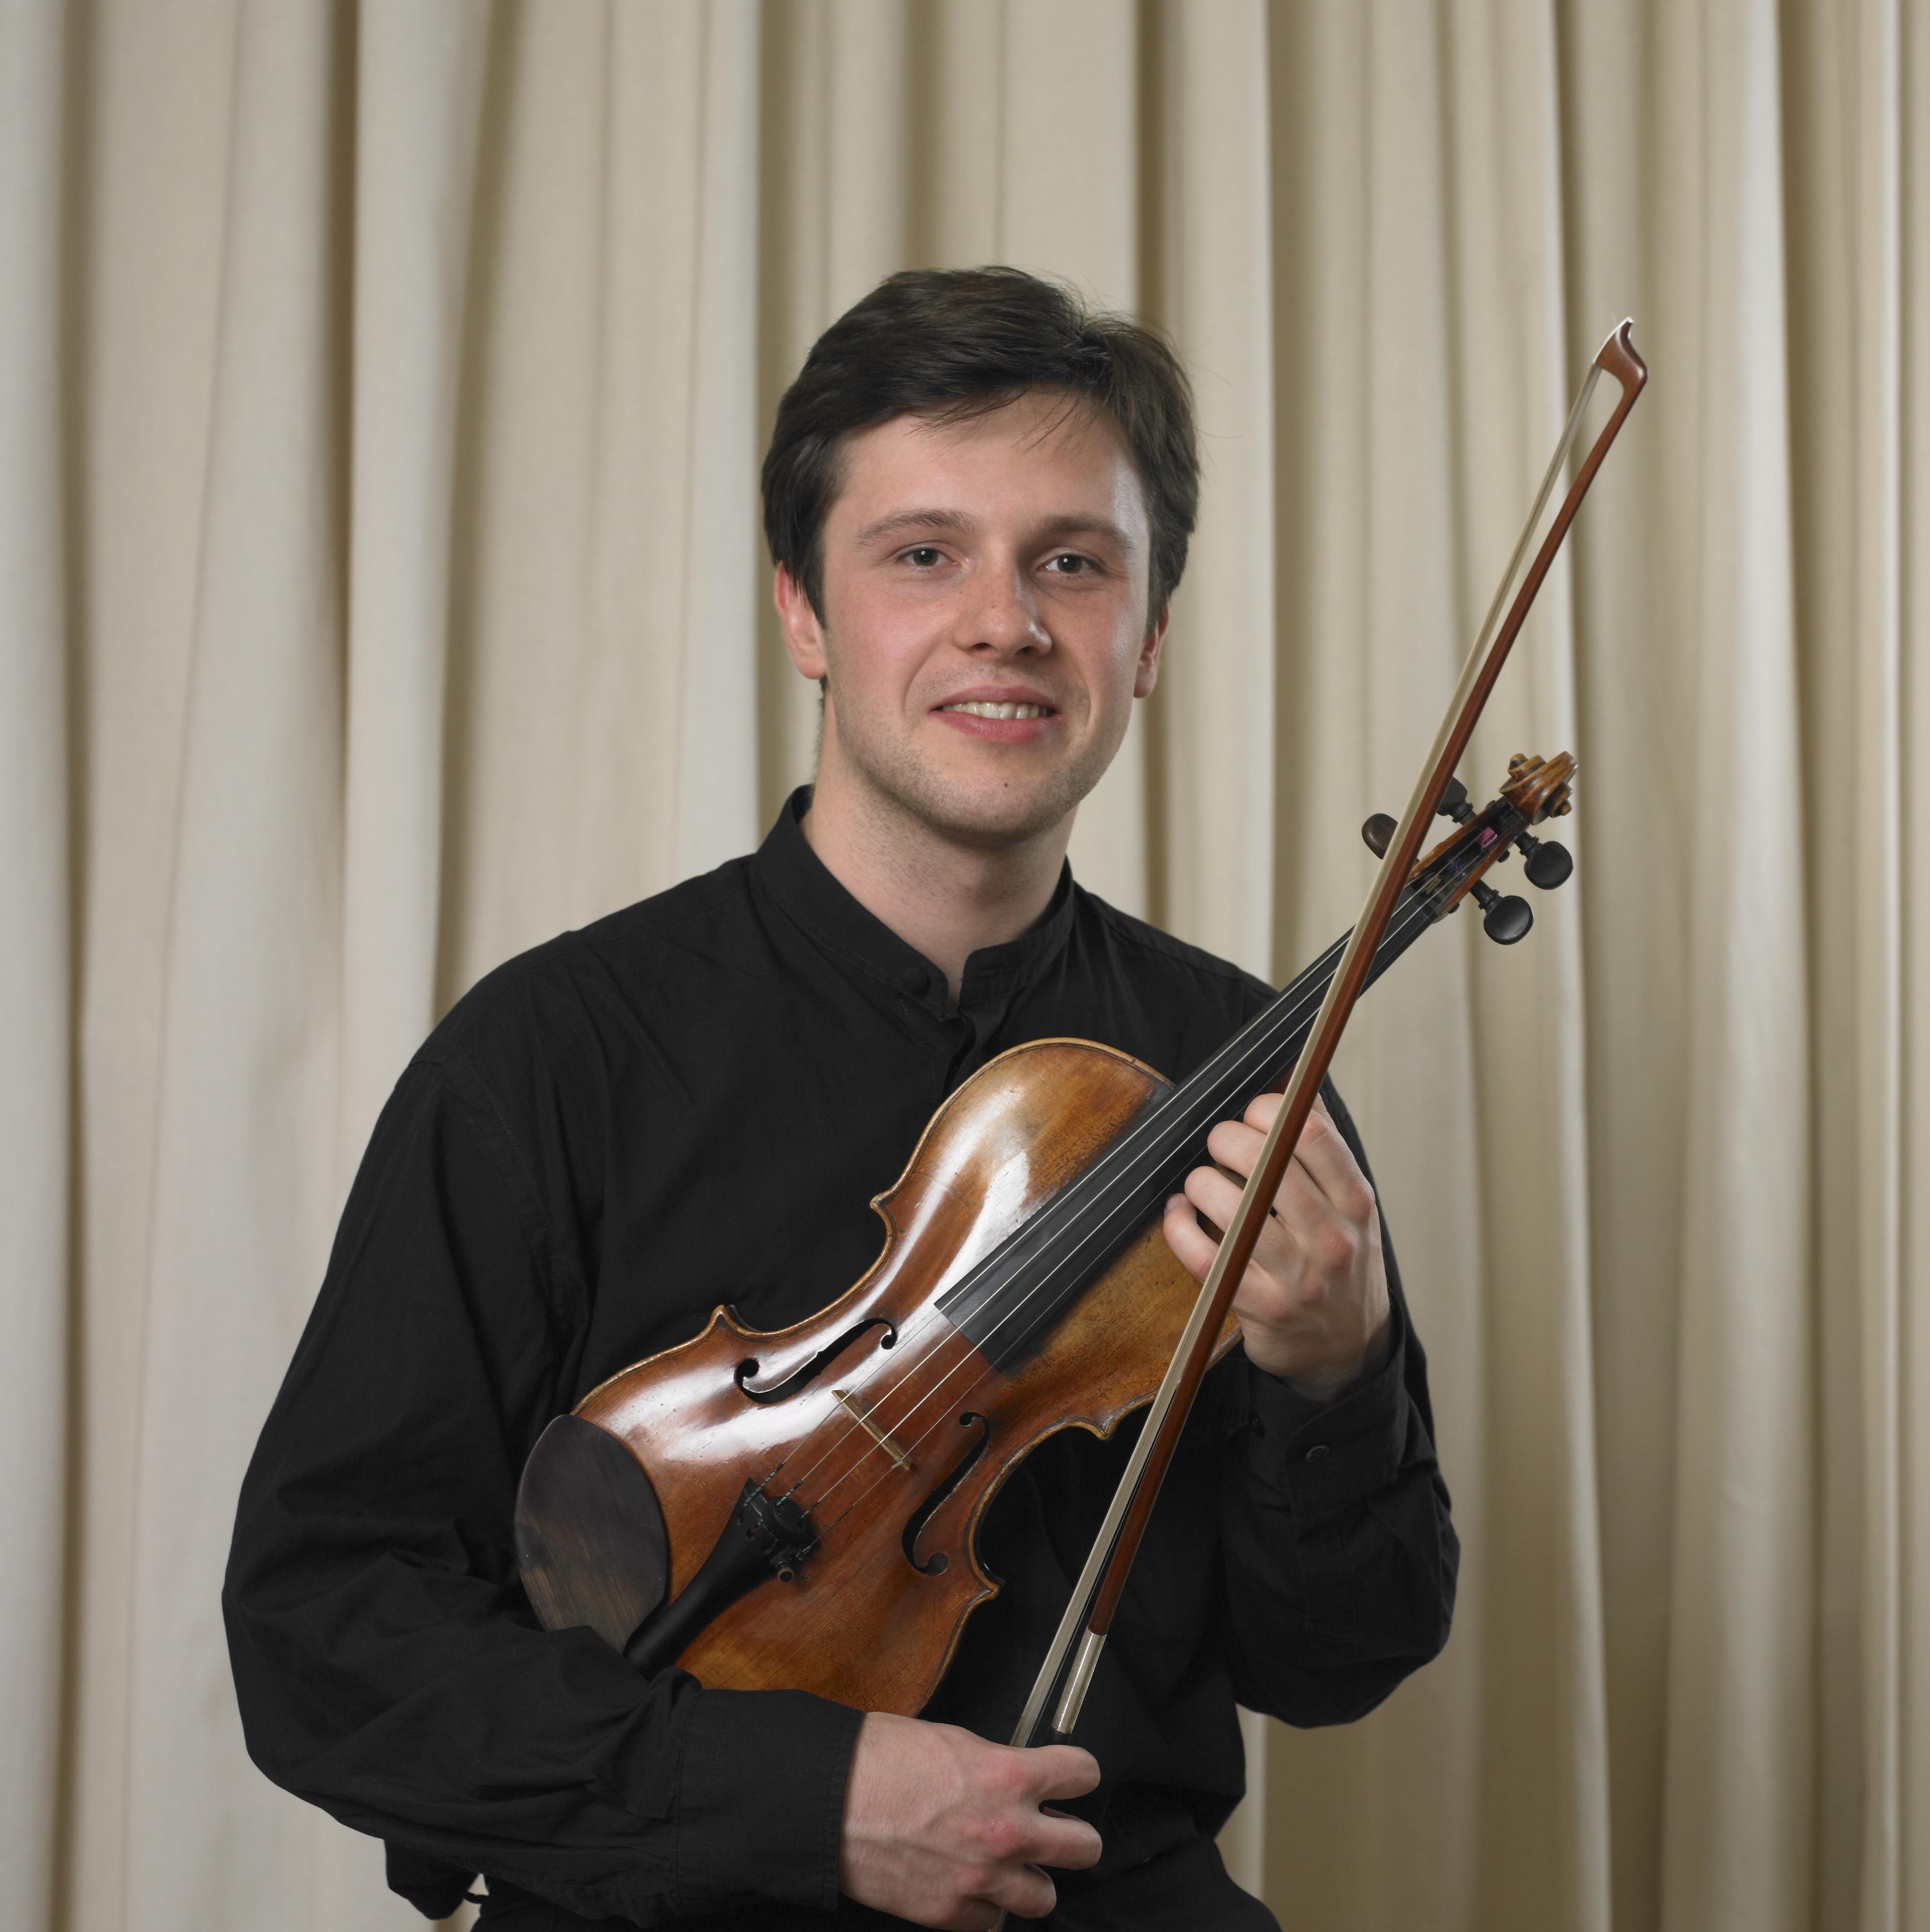 Rahn Musikpreis 2006, Alexander Grytsayenko 1. prize violin